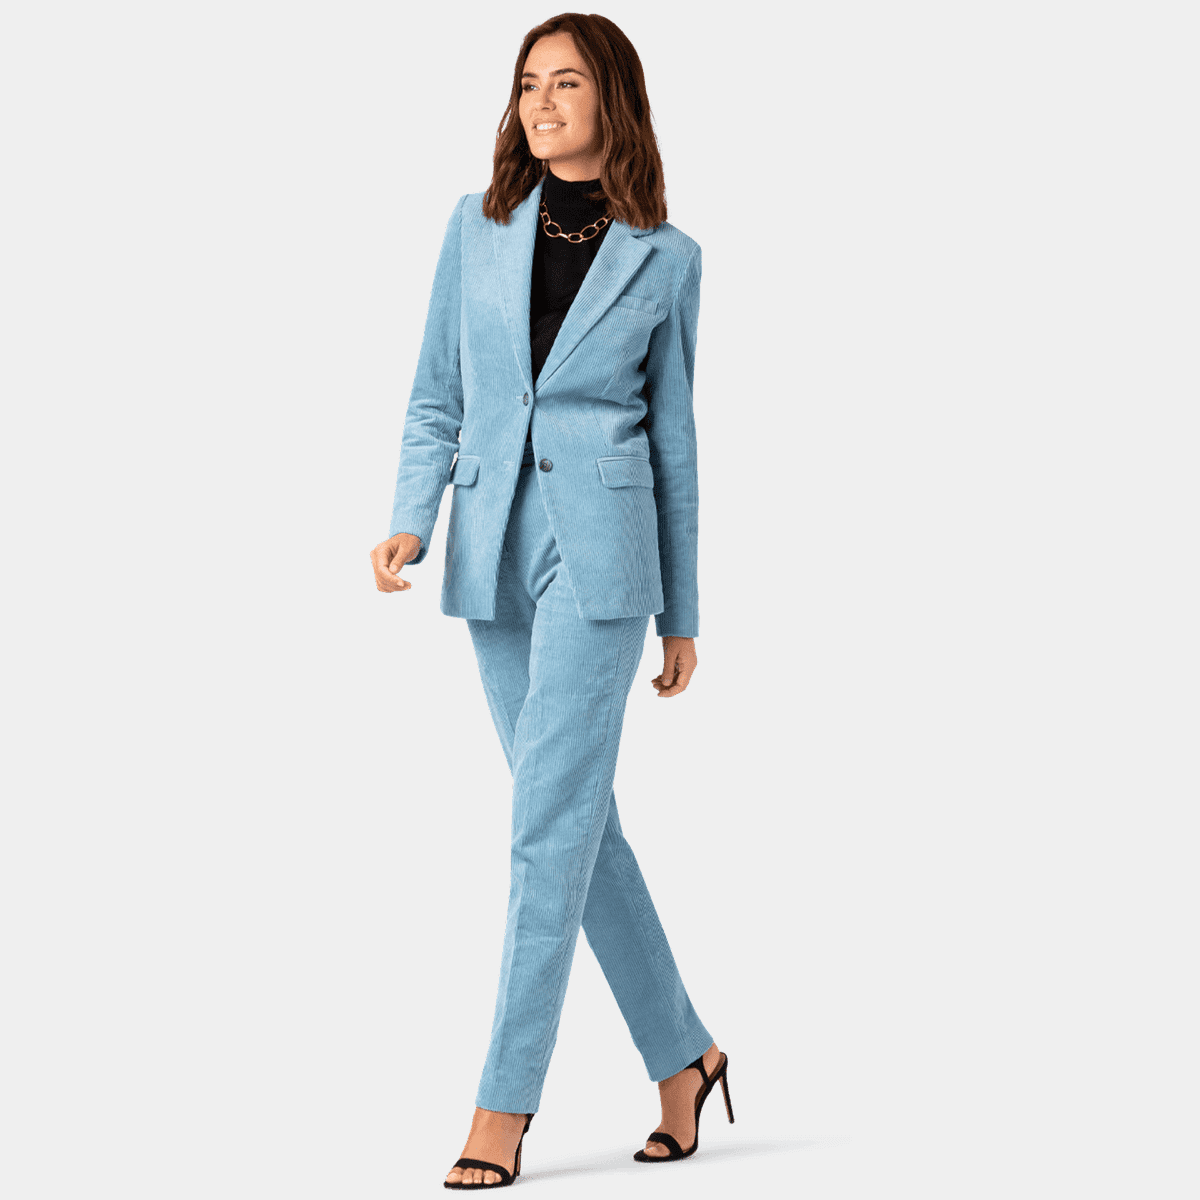 Blue Corduroy Woman Suit 229€ | Sumissura